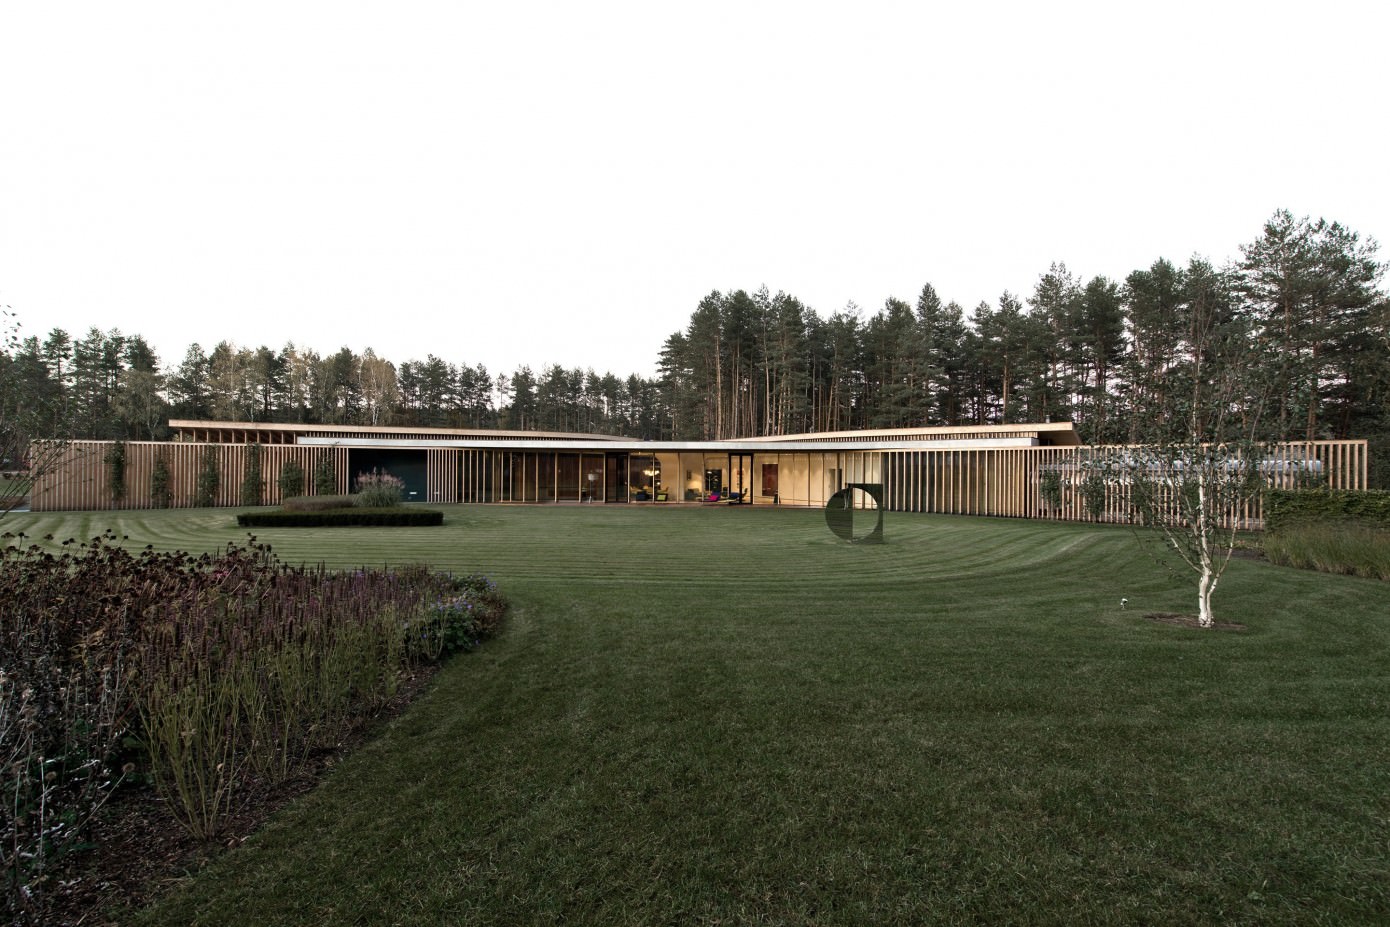 Villa G by Audrius Ambrasas Architects